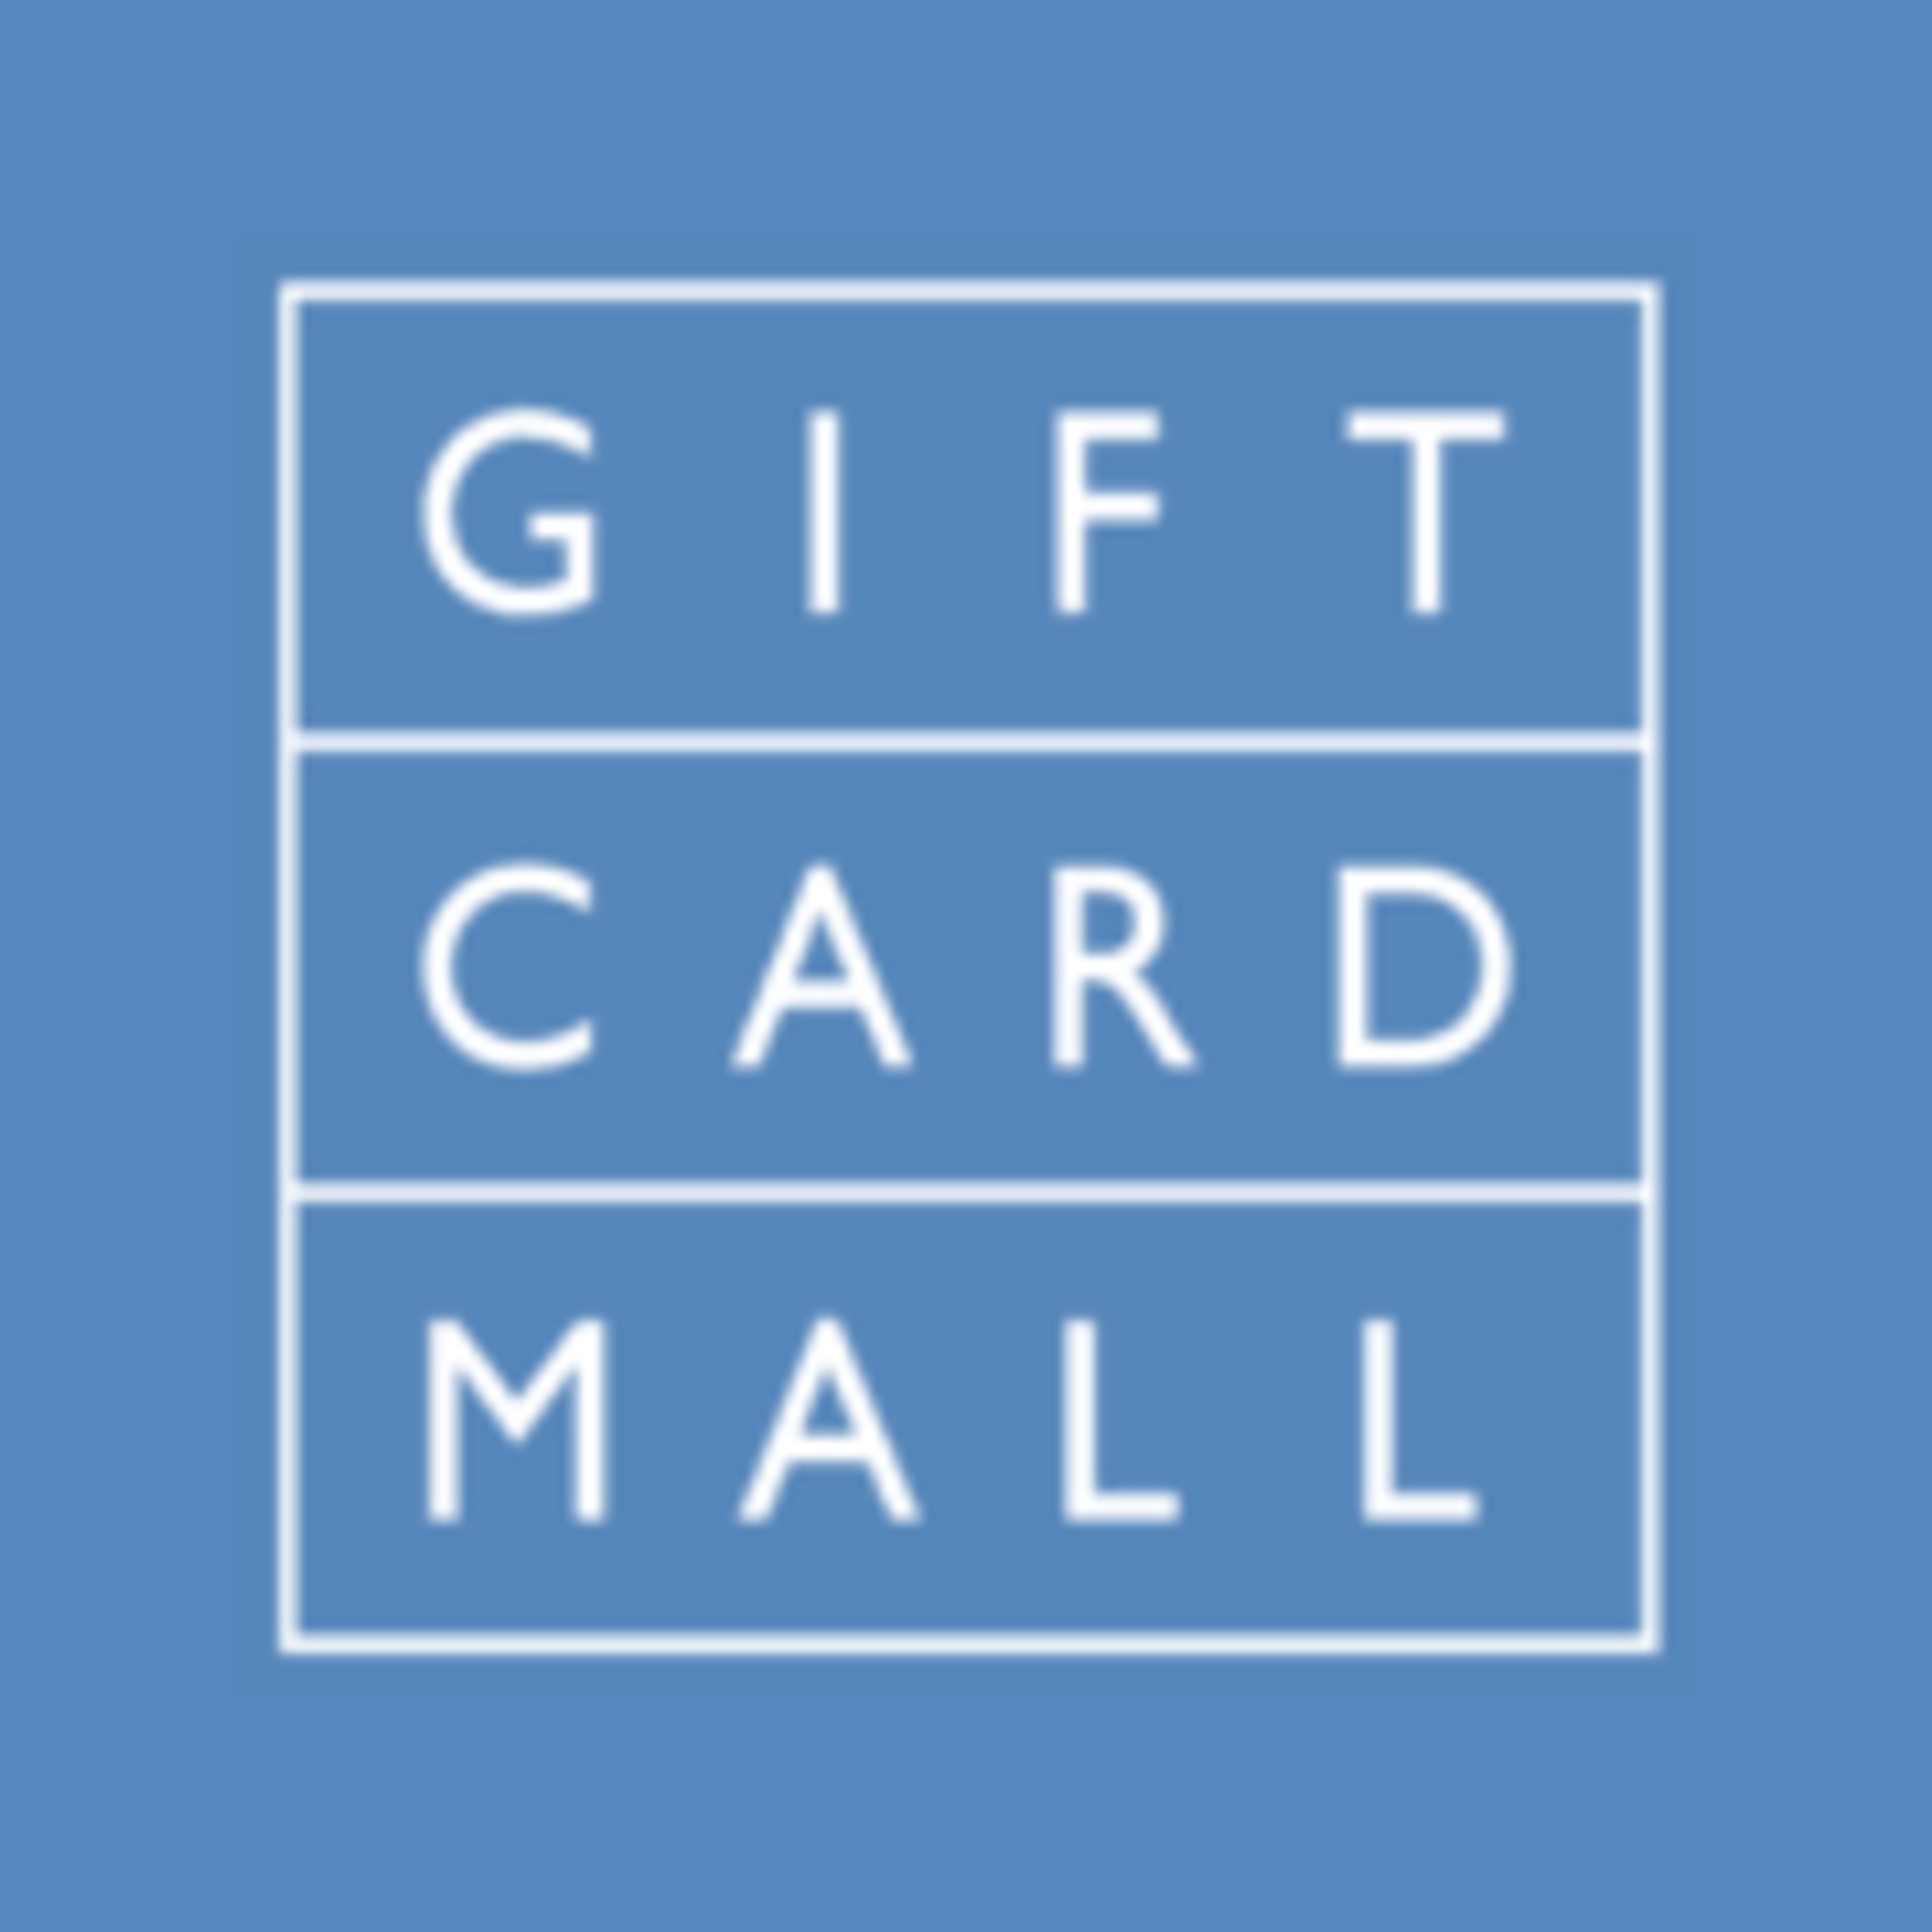 Gift Card Mall Code